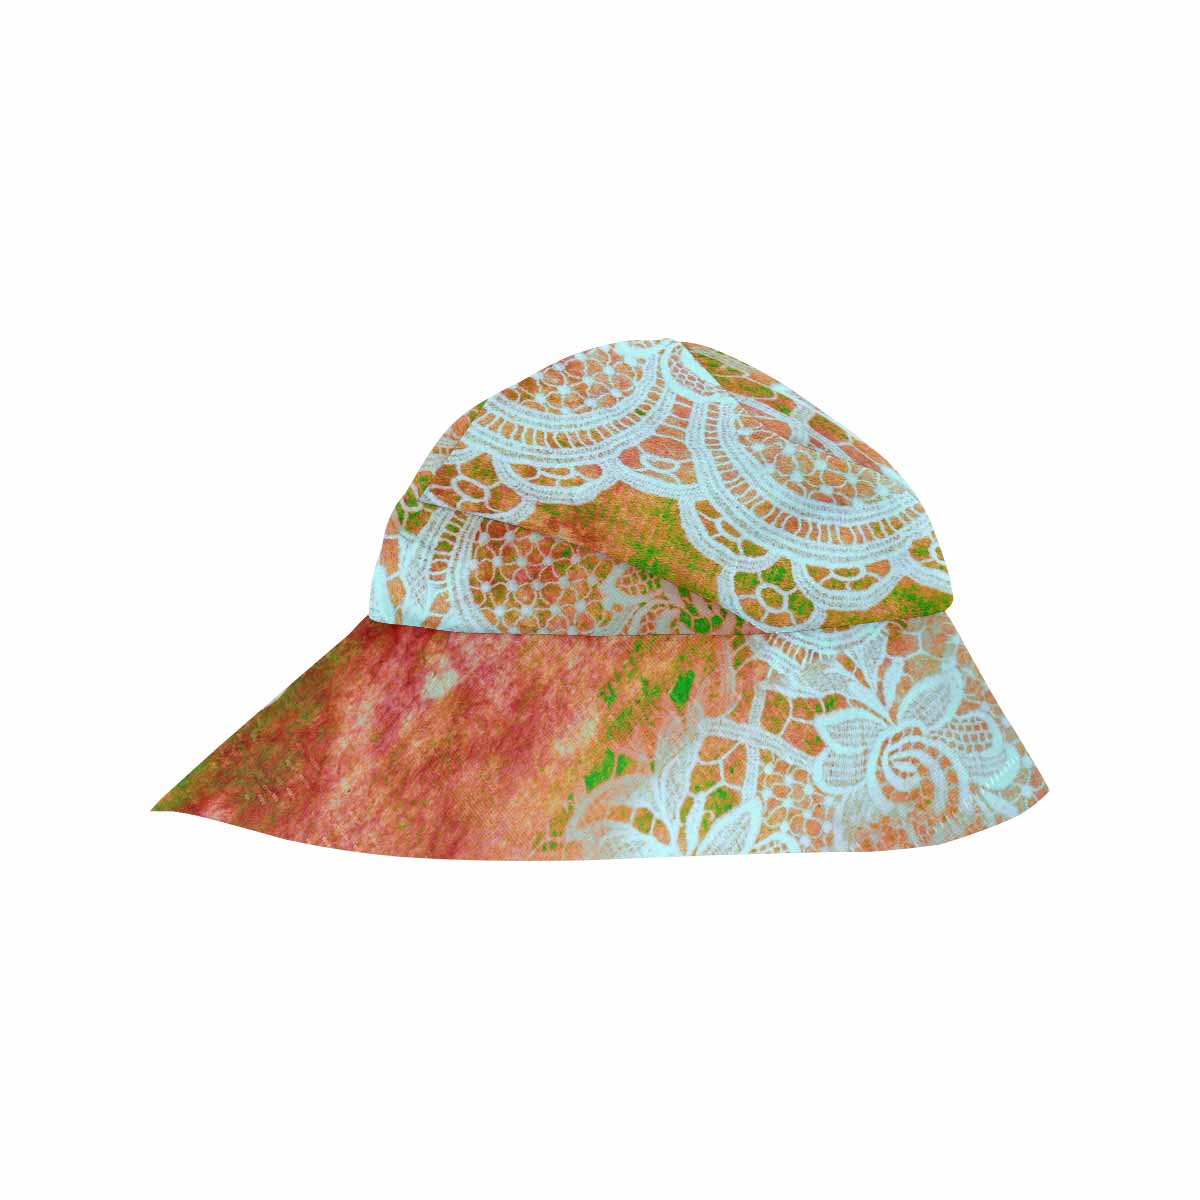 Victorian lace print, wide brim sunvisor Hat, outdoors hat, design 31